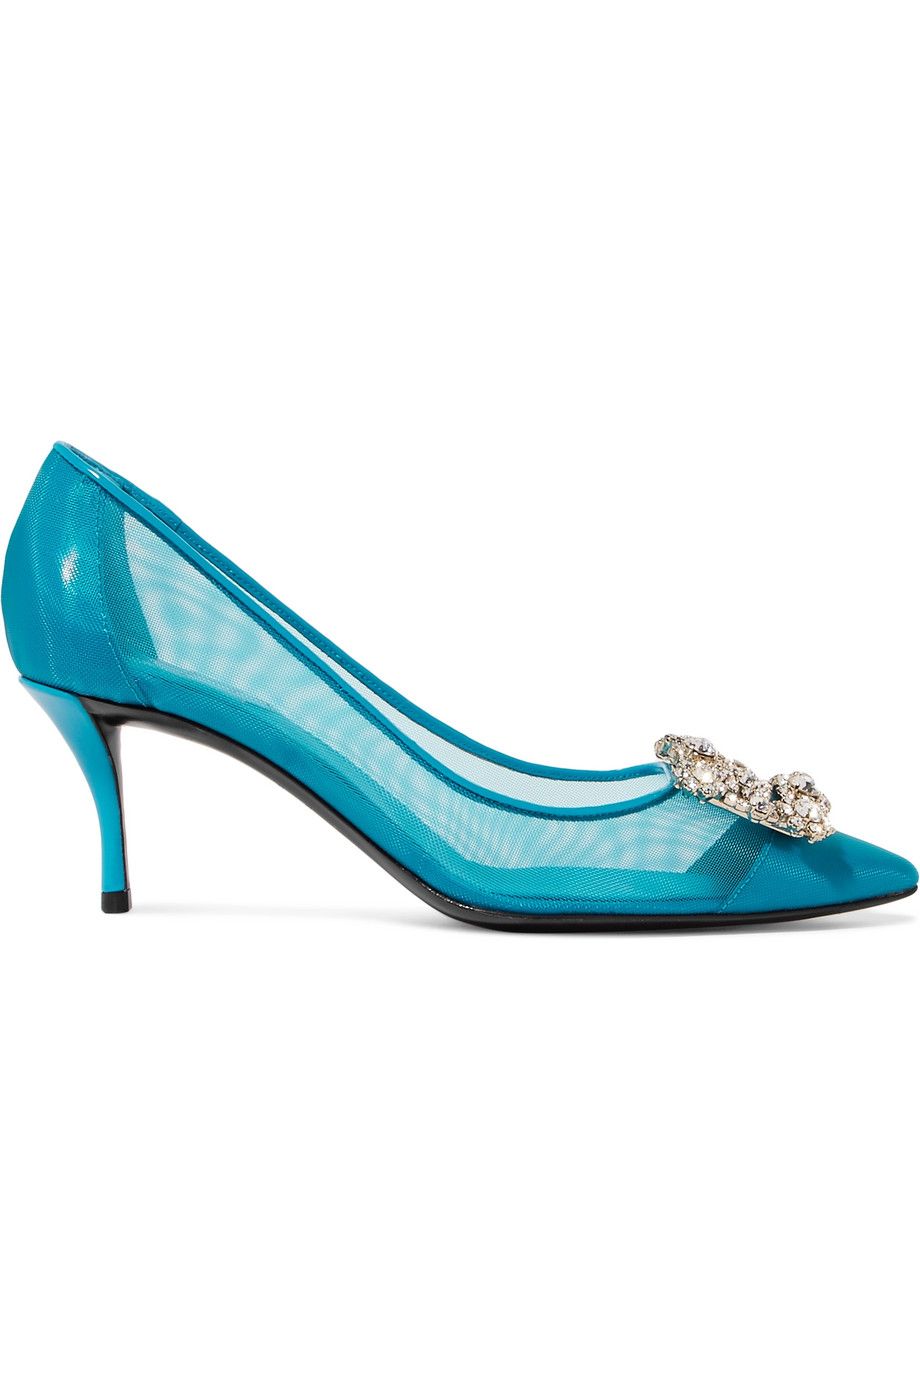 Footwear, High heels, Turquoise, Green, Blue, Shoe, Teal, Aqua, Court shoe, Turquoise, 